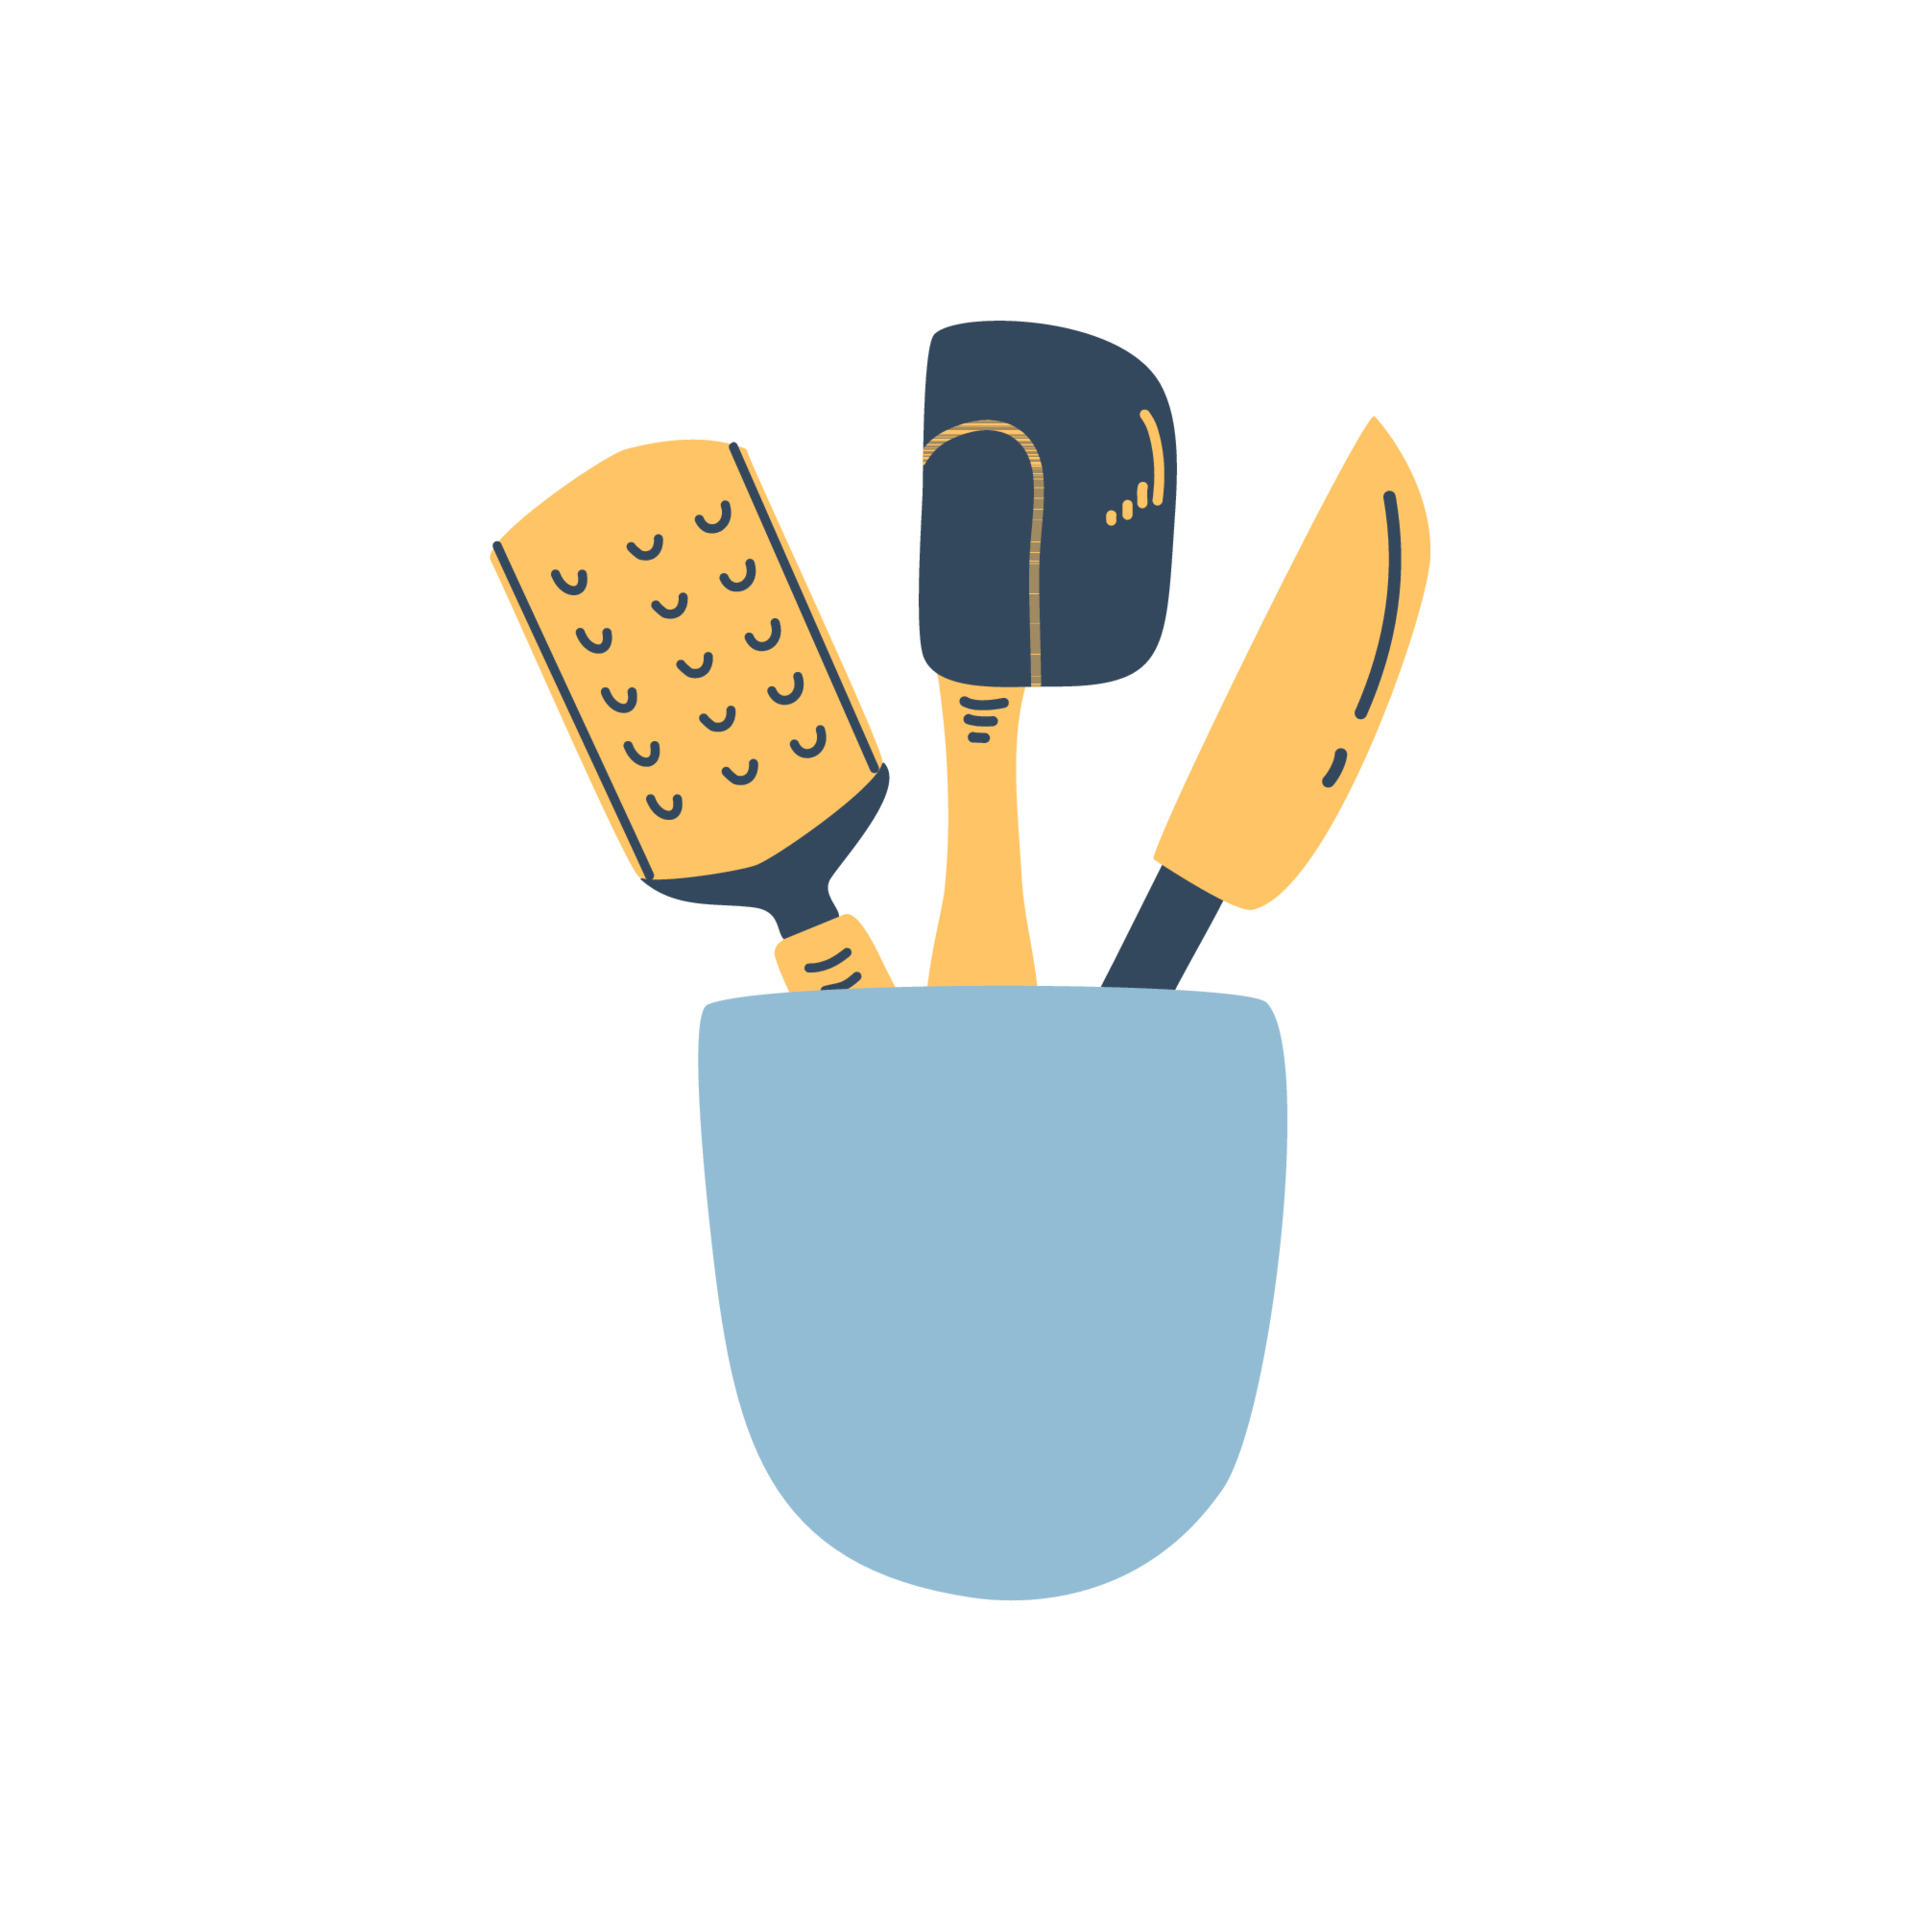 https://static.vecteezy.com/system/resources/previews/024/631/194/original/cute-kitchen-utensils-vector.jpg